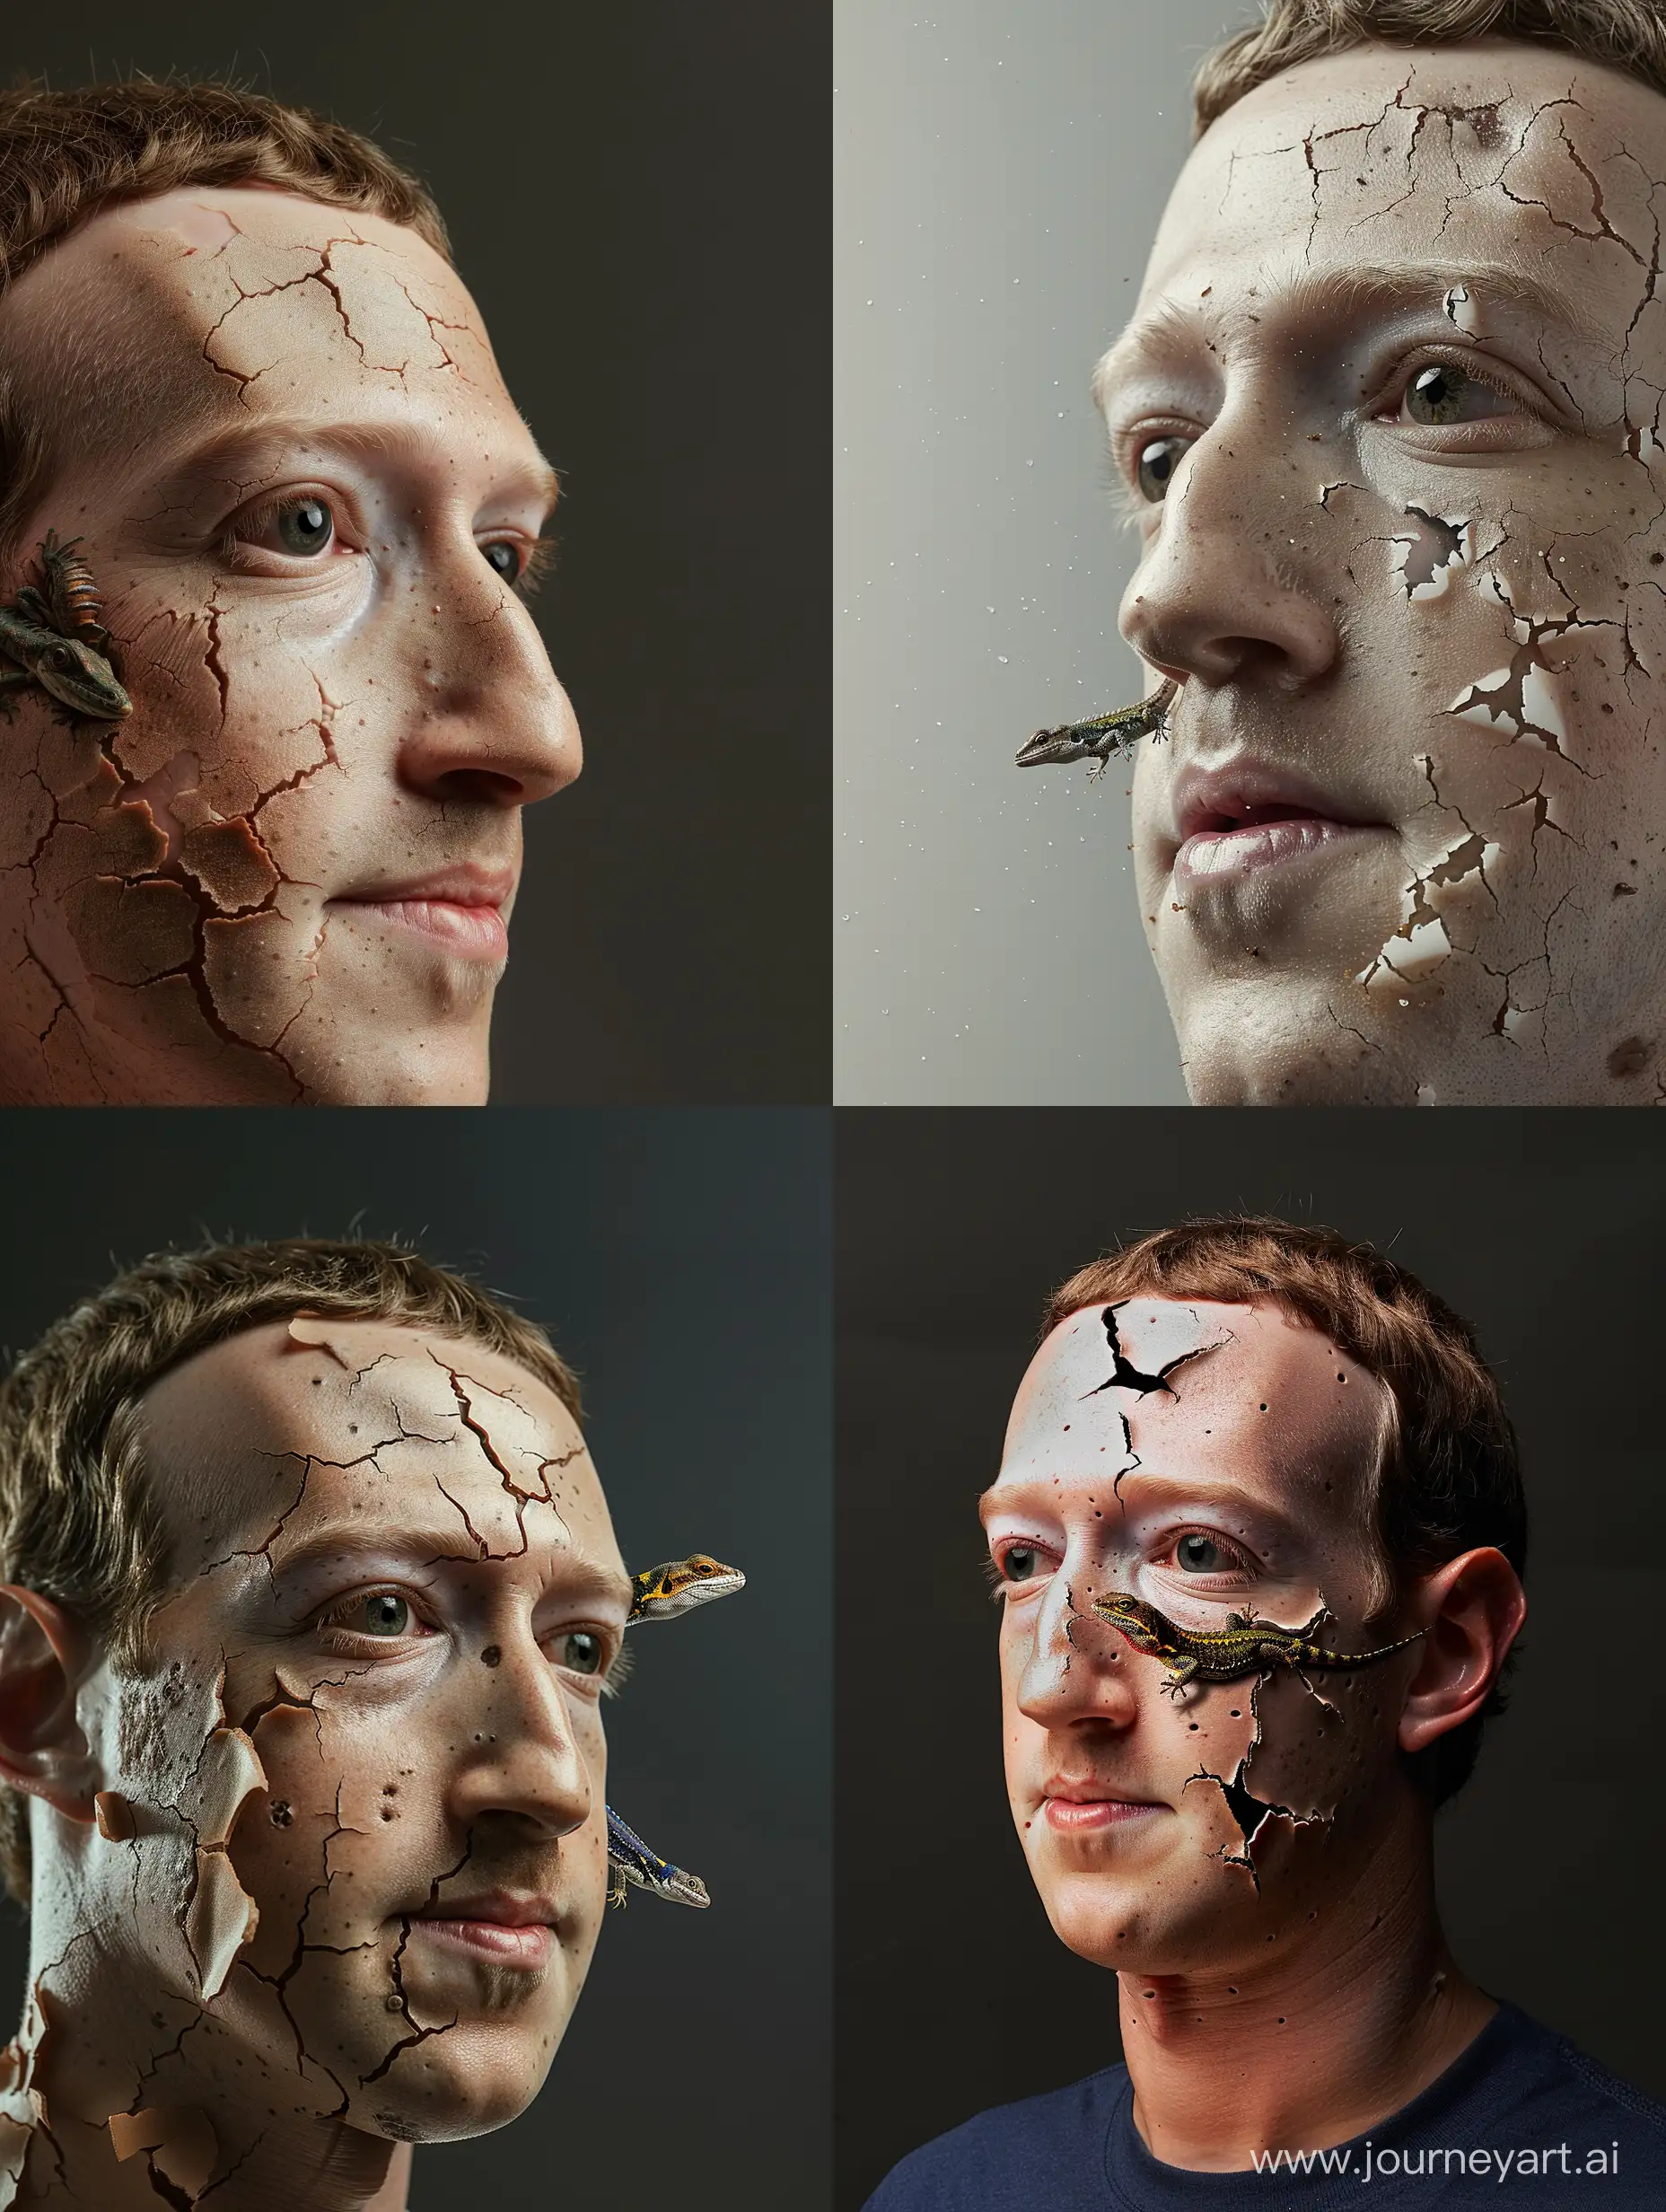 Photograph of Mark Zuckerberg's skin peeling with a lizard underneath